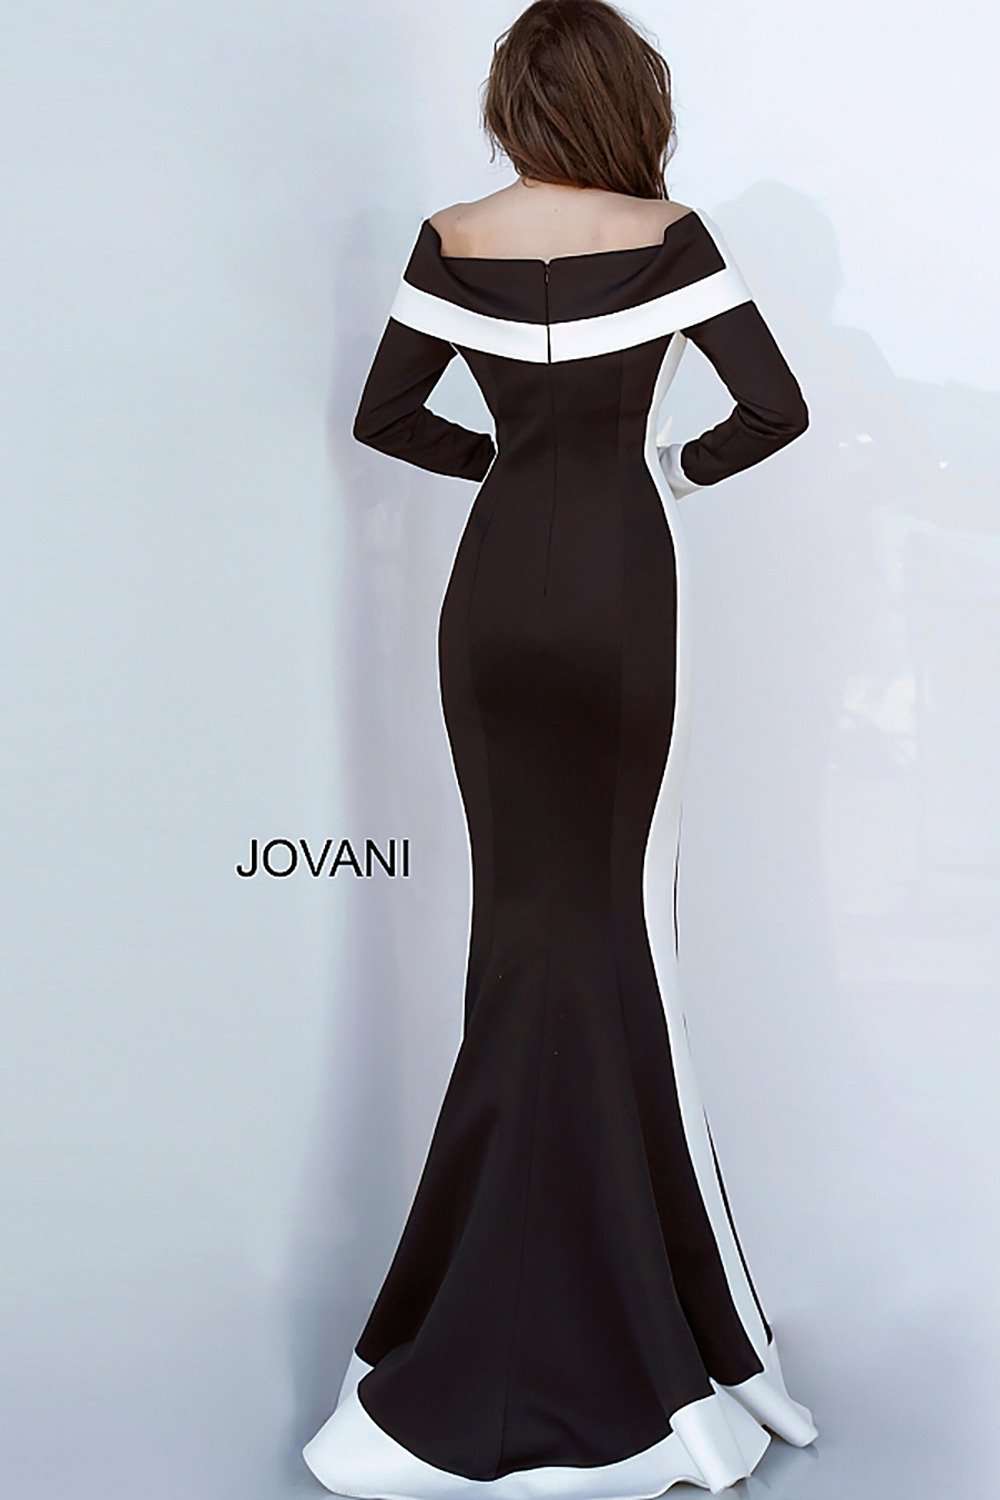 Black and White Long Sleeve Evening Dress Jovani 4062 - Morvarieds Fashion